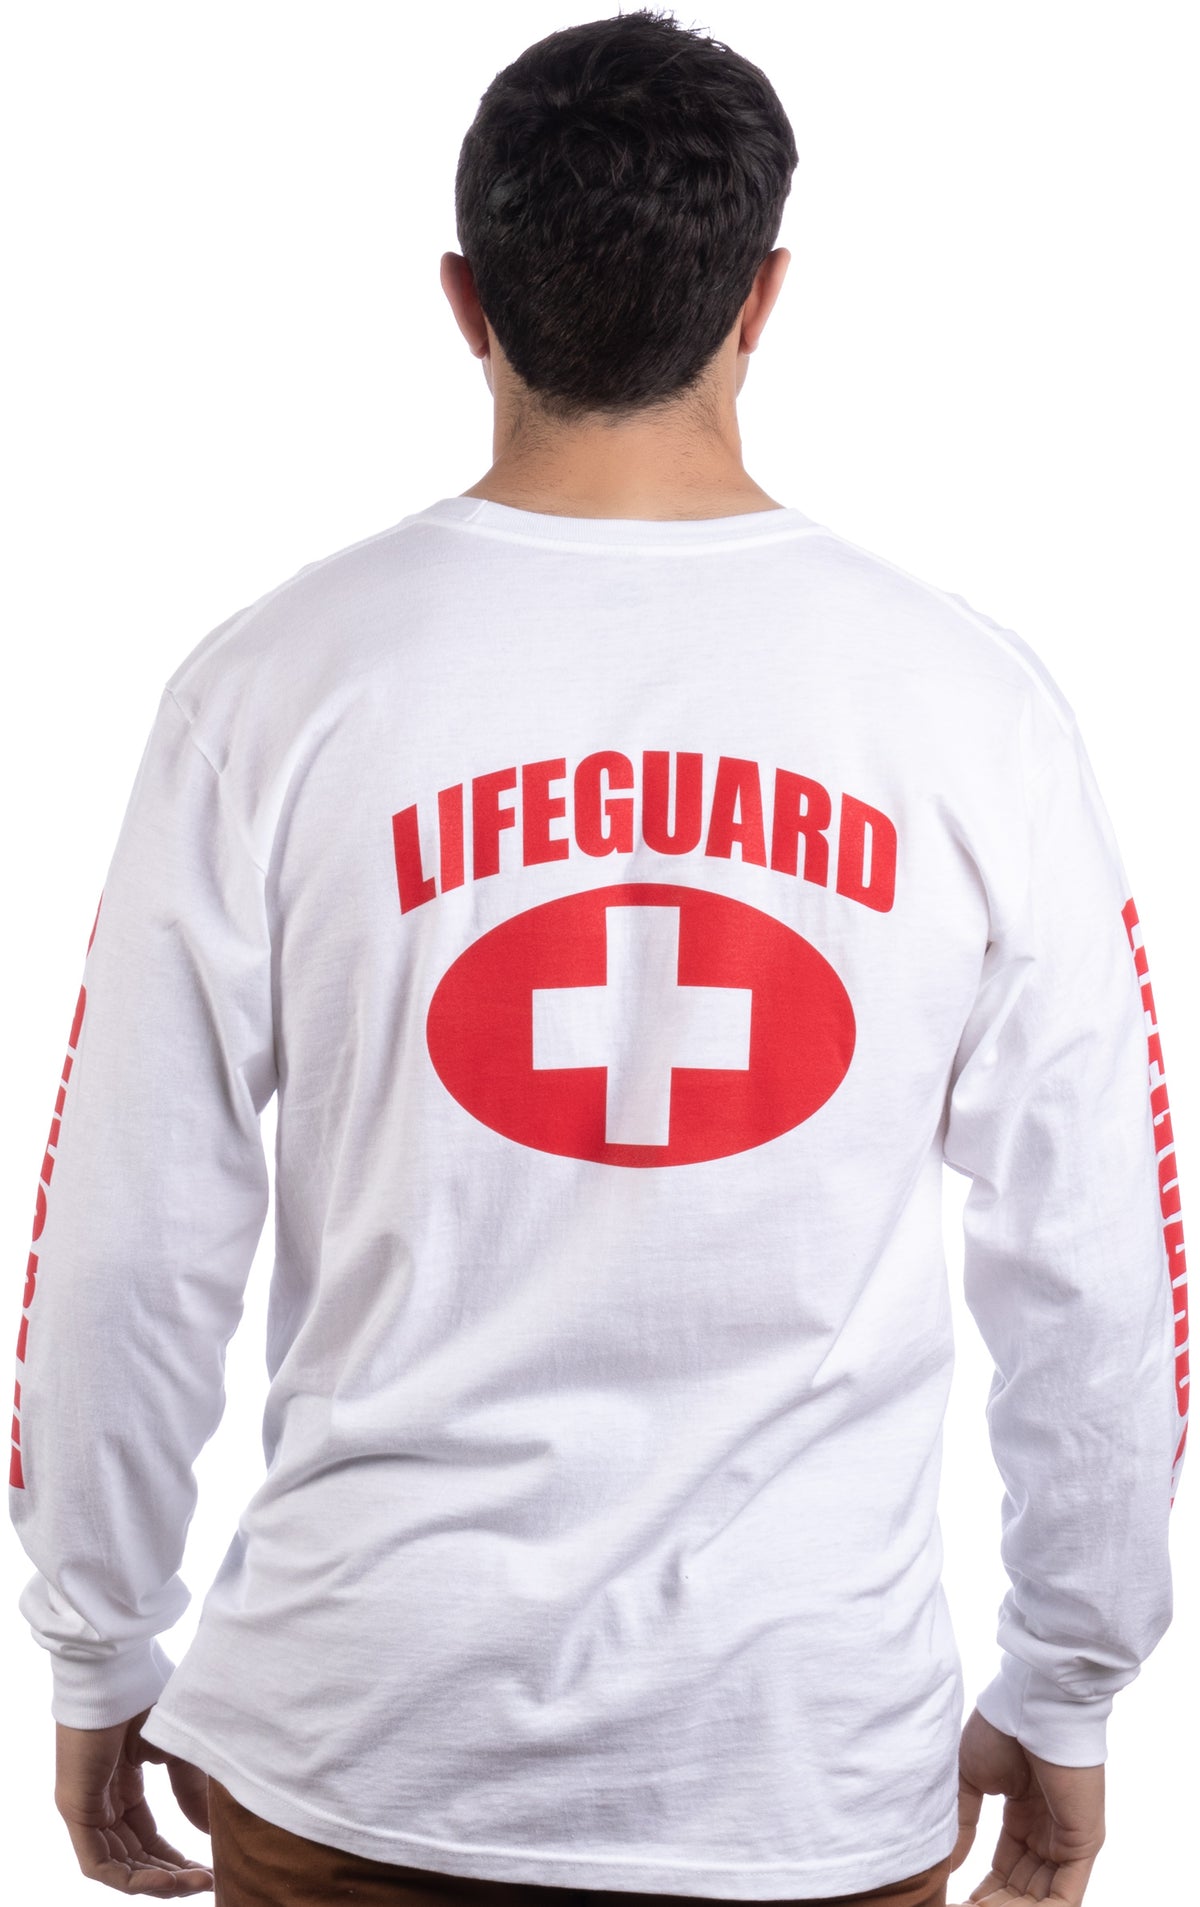 LIFEGUARD | Red or White Unisex Uniform Costume Long Sleeve T-shirt Men Women